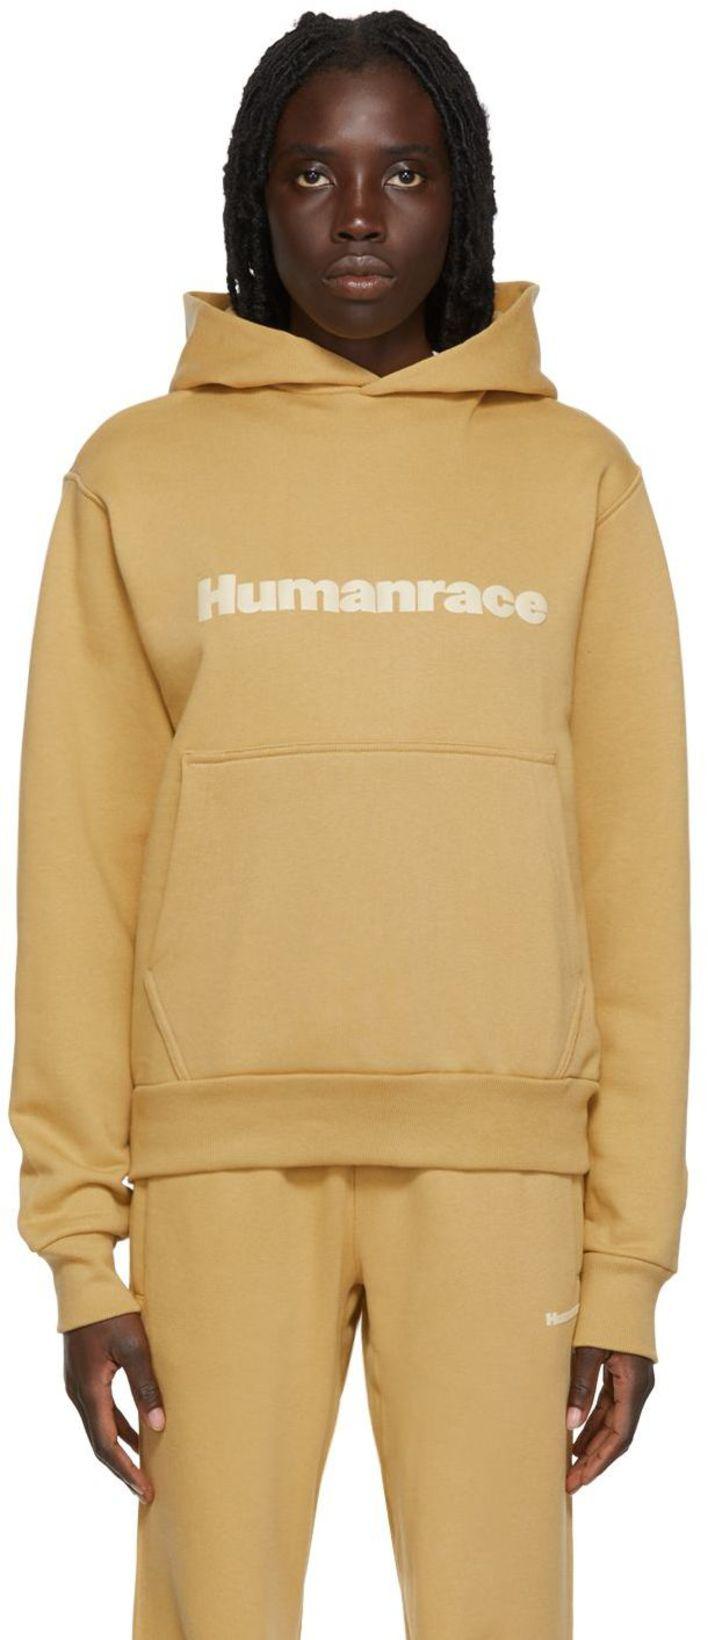 Tan Humanrace Basics Hoodie by ADIDAS X HUMANRACE BY PHARRELL WILLIAMS